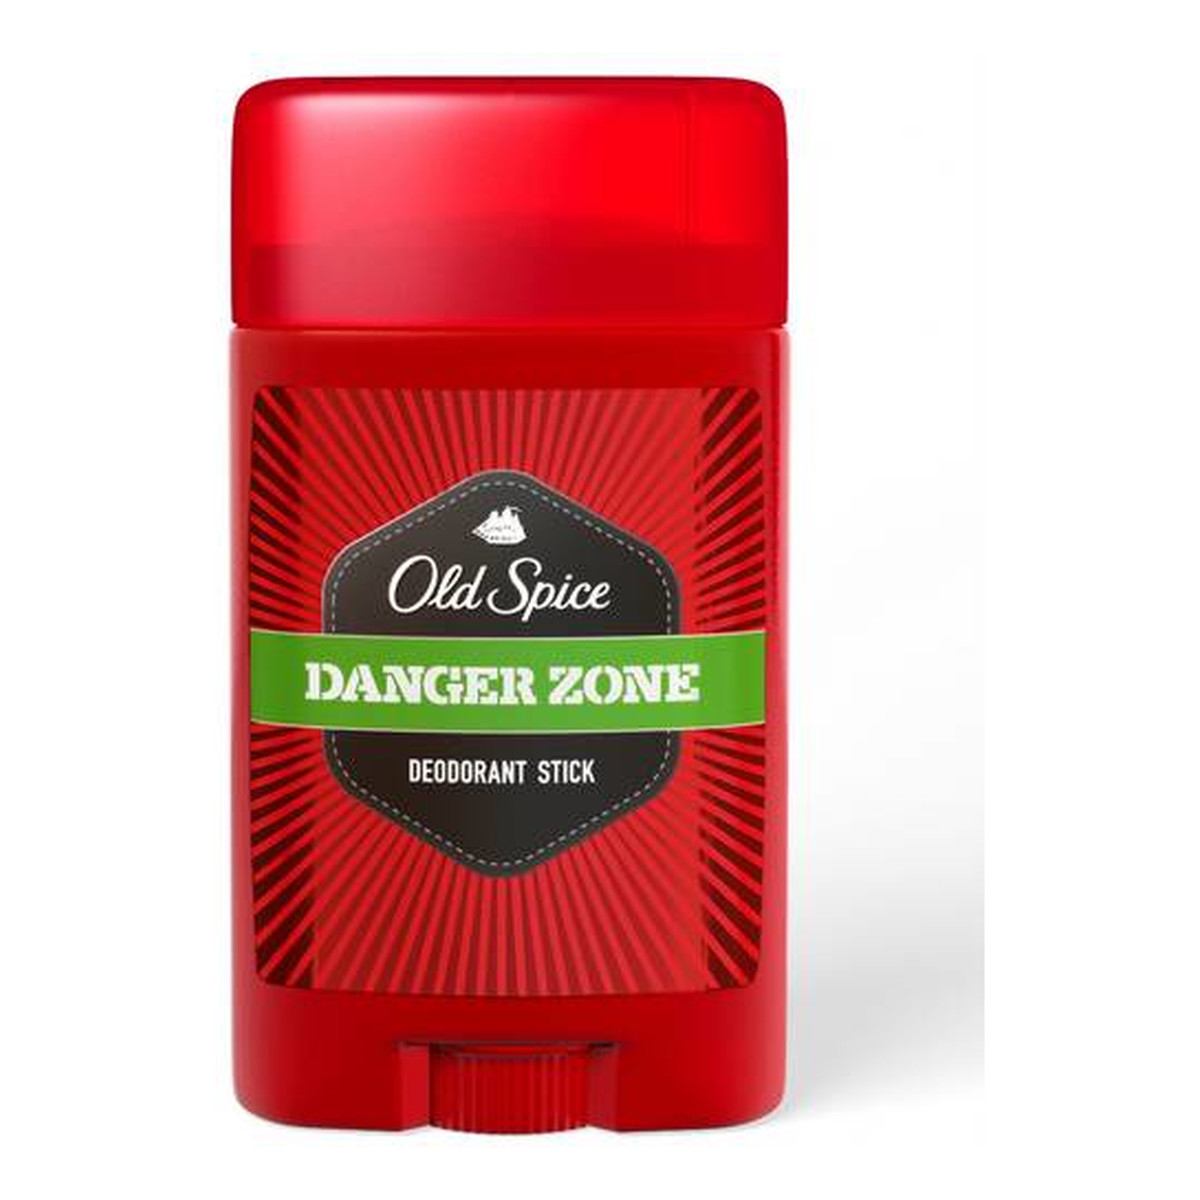 Old Spice Danger Zone Dezodorant Sztyft 50ml